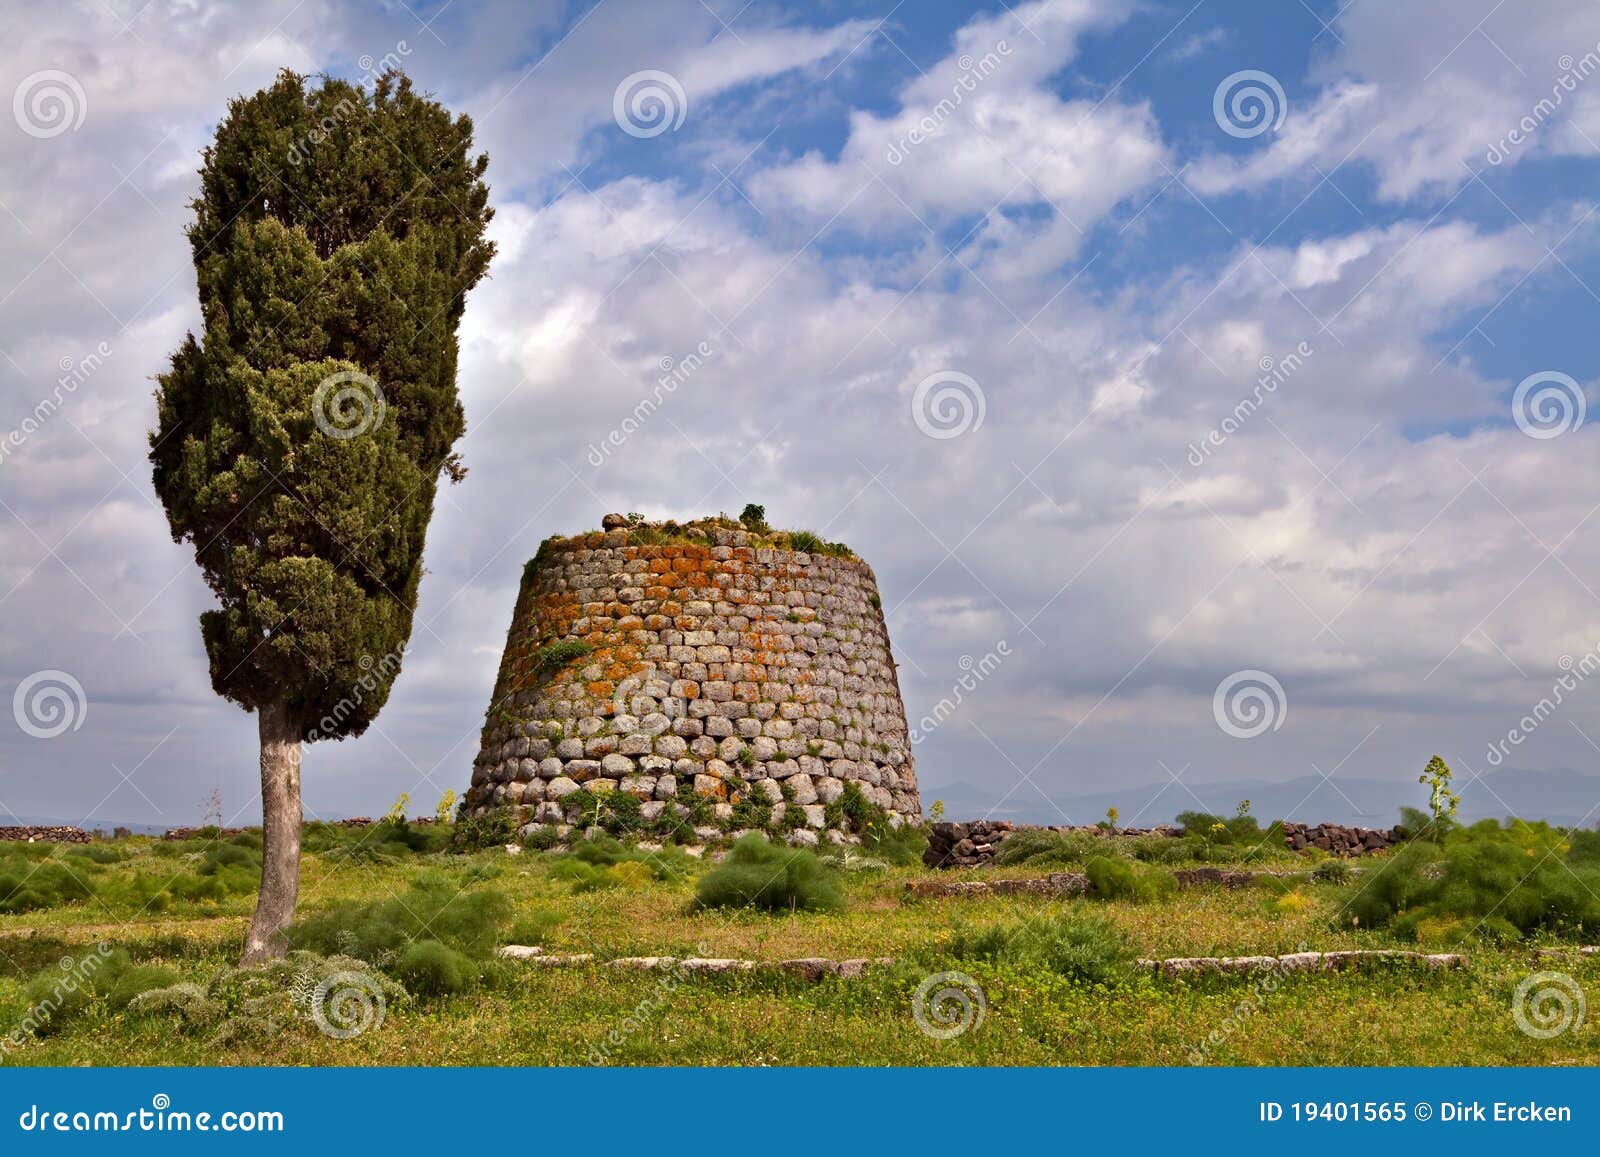 nuraghe tower sardinia italy bronze age ruin